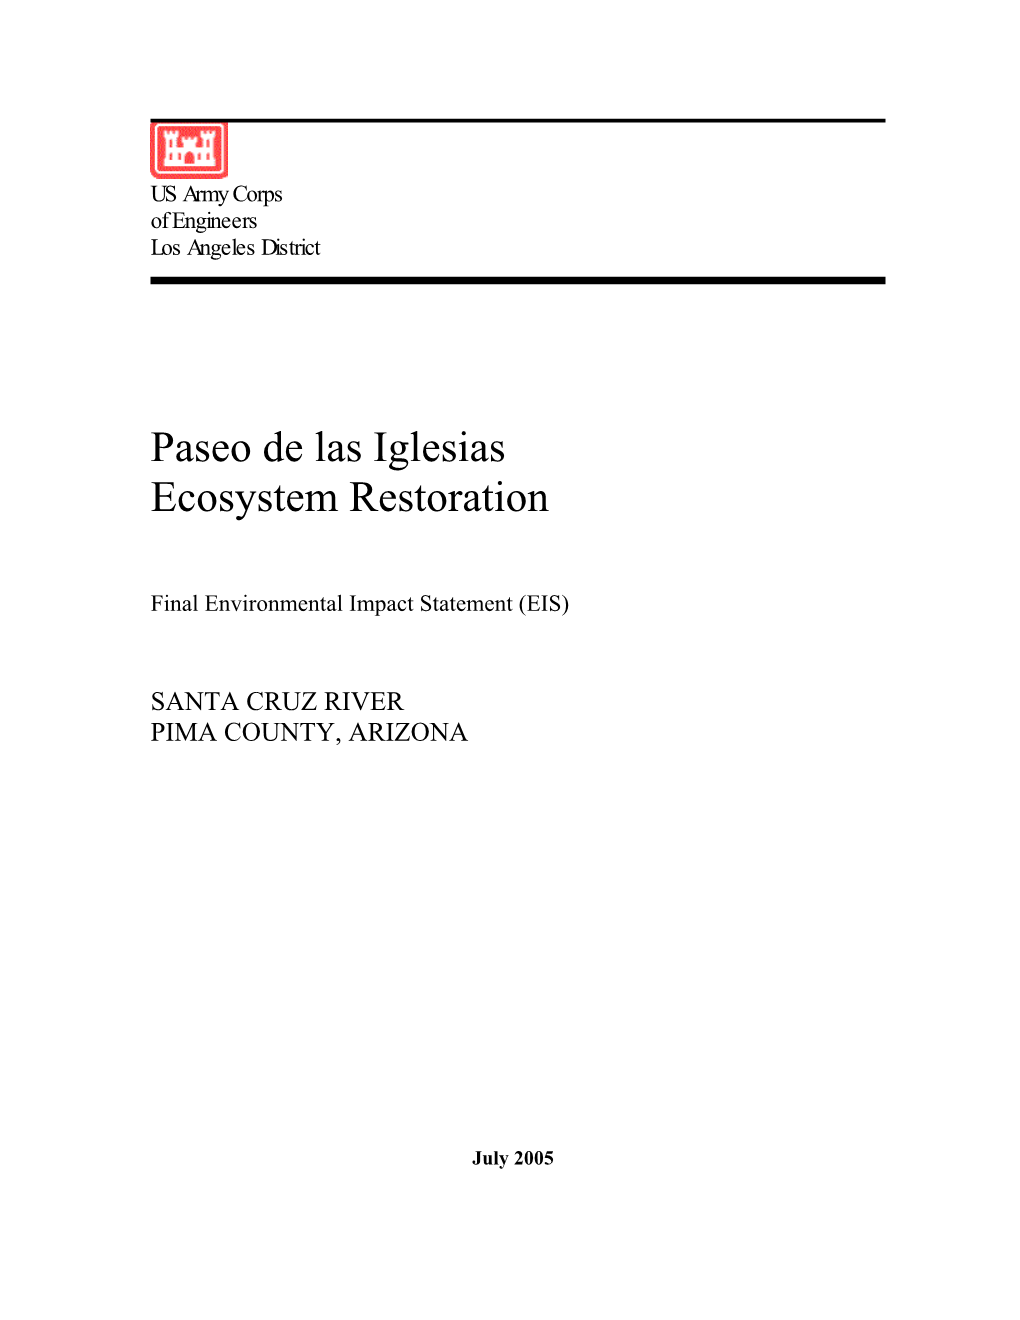 Paseo De Las Iglesias Draft Biological Resources Report (Modified Habitat Evaluation Procedure)